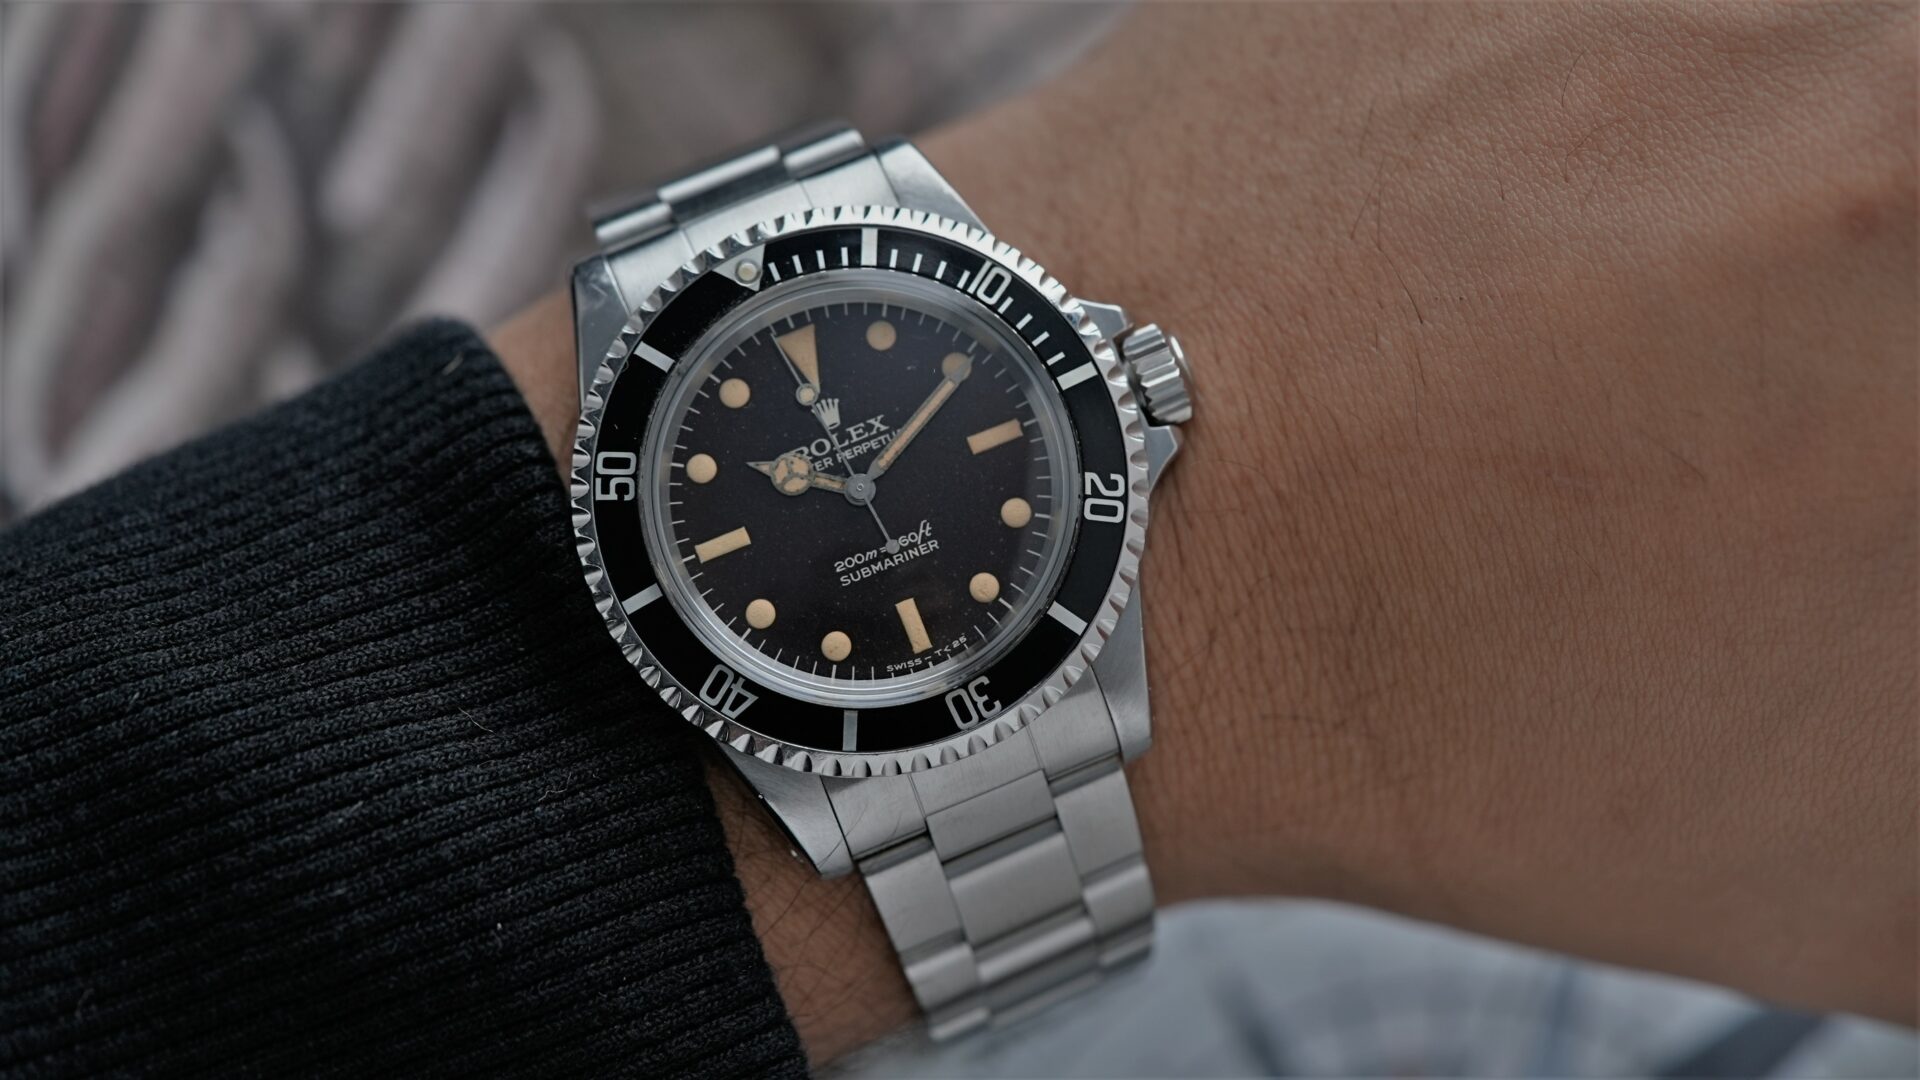 Rolex Submariner 5513 Bart Simpson Tropical Dial Original Patina Unpolished watch wrist shot.